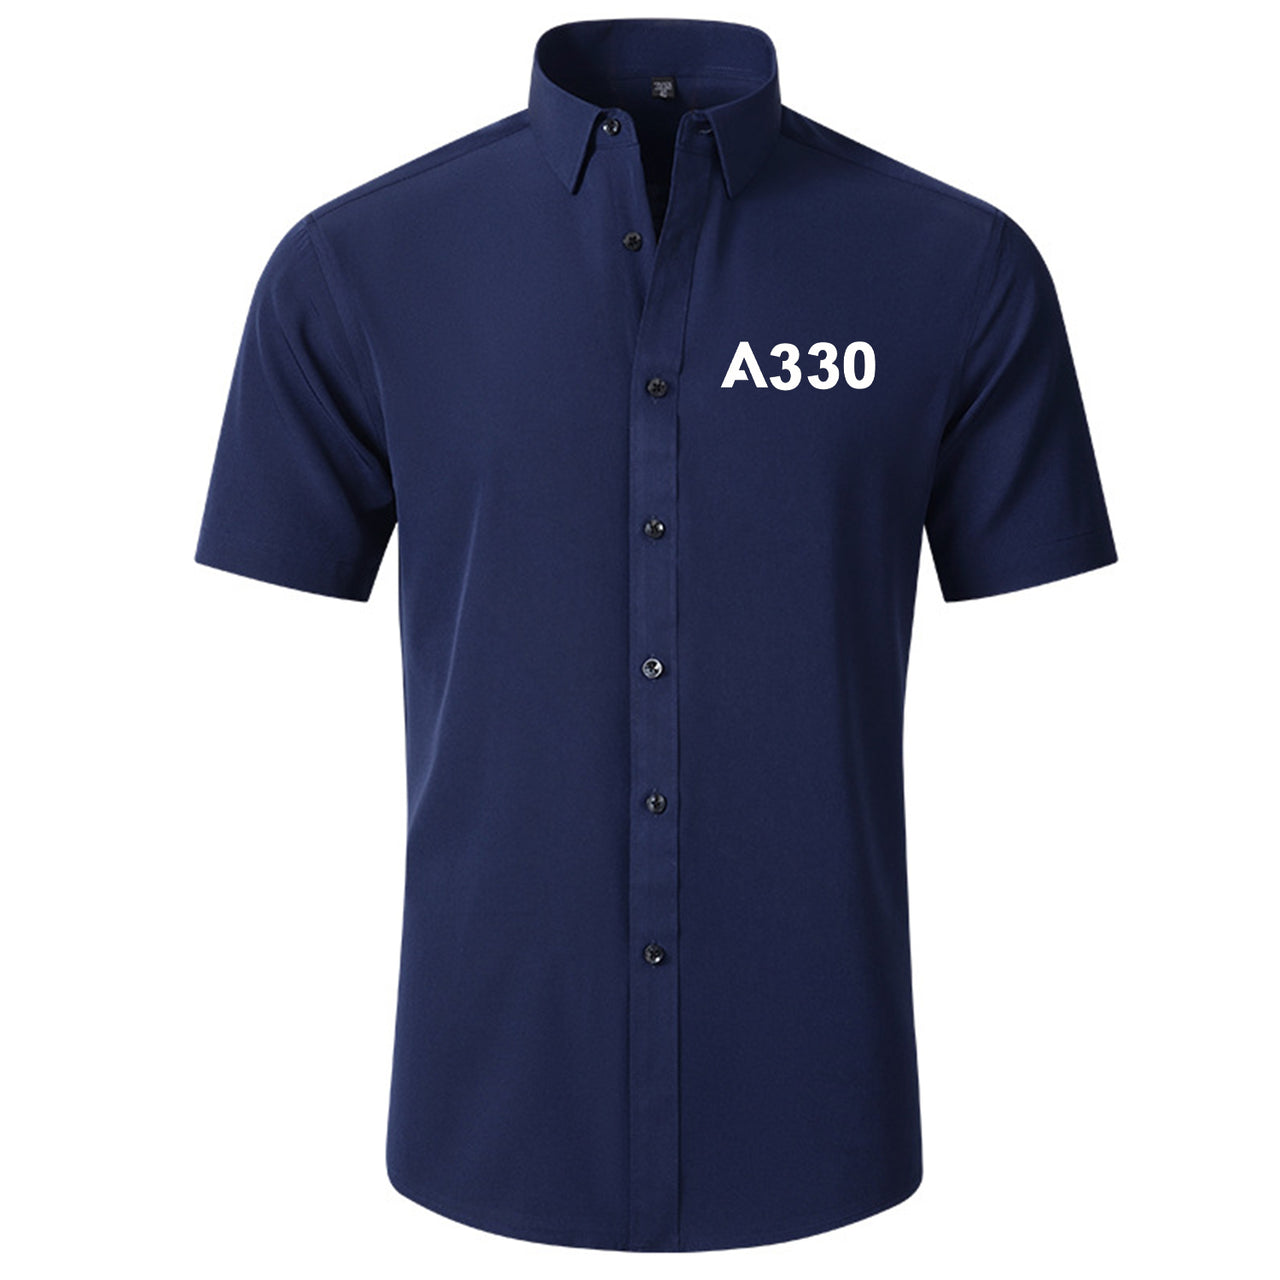 A330 Flat Text Designed Short Sleeve Shirts